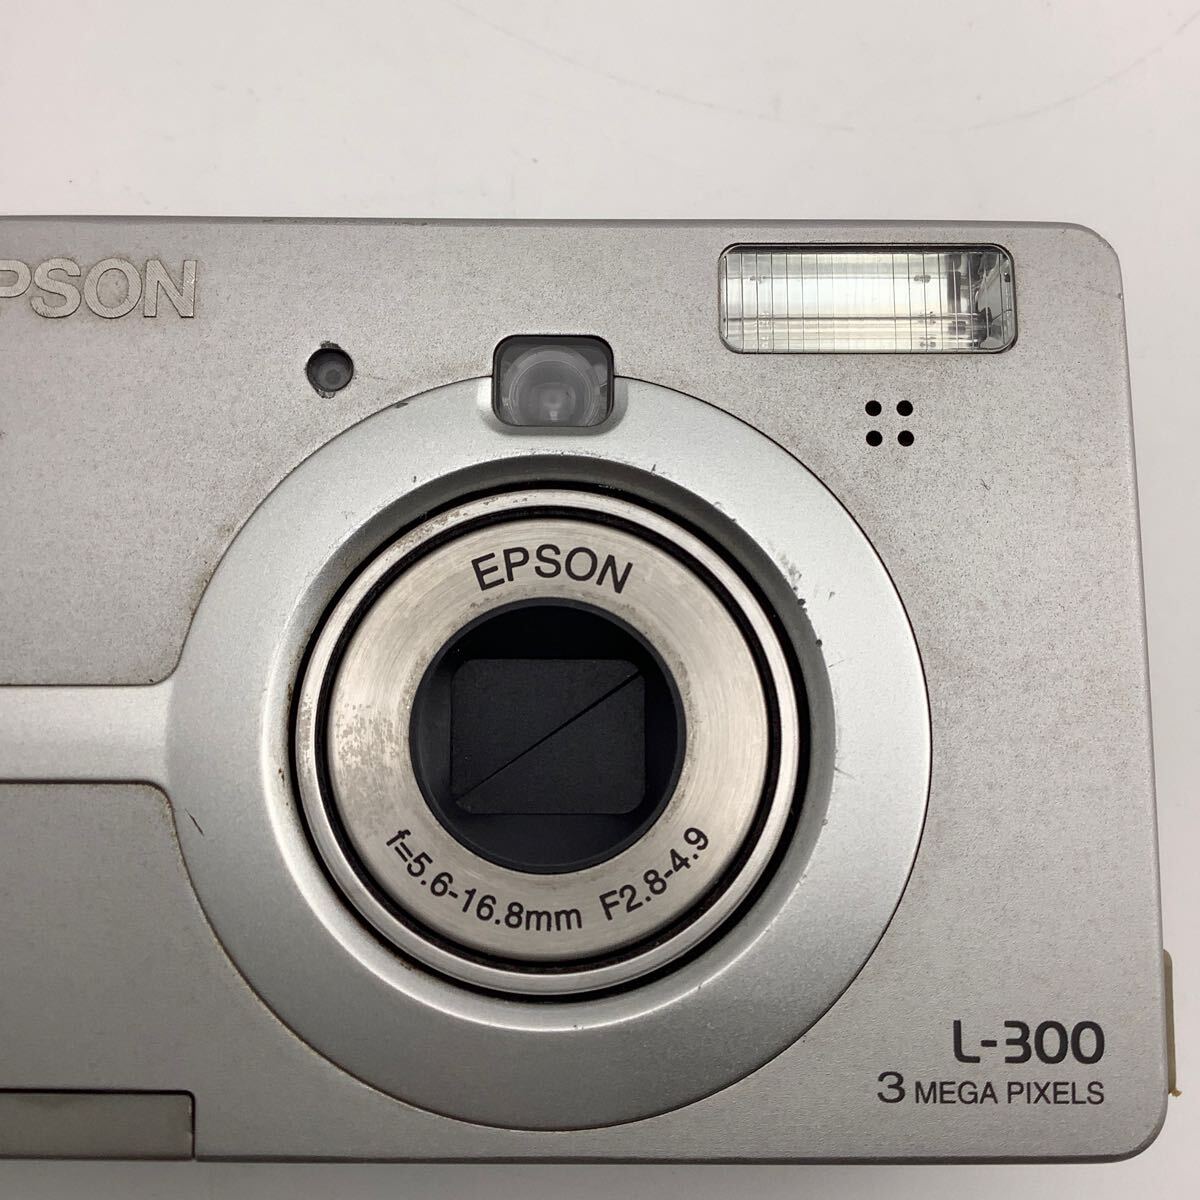 EPSON デジタルカメラ L-300 シルバーボディー f=5.6-16.8㎜ F2.8-4.9 エプソン 3MEGA PIXELS [k8209-C16]の画像8